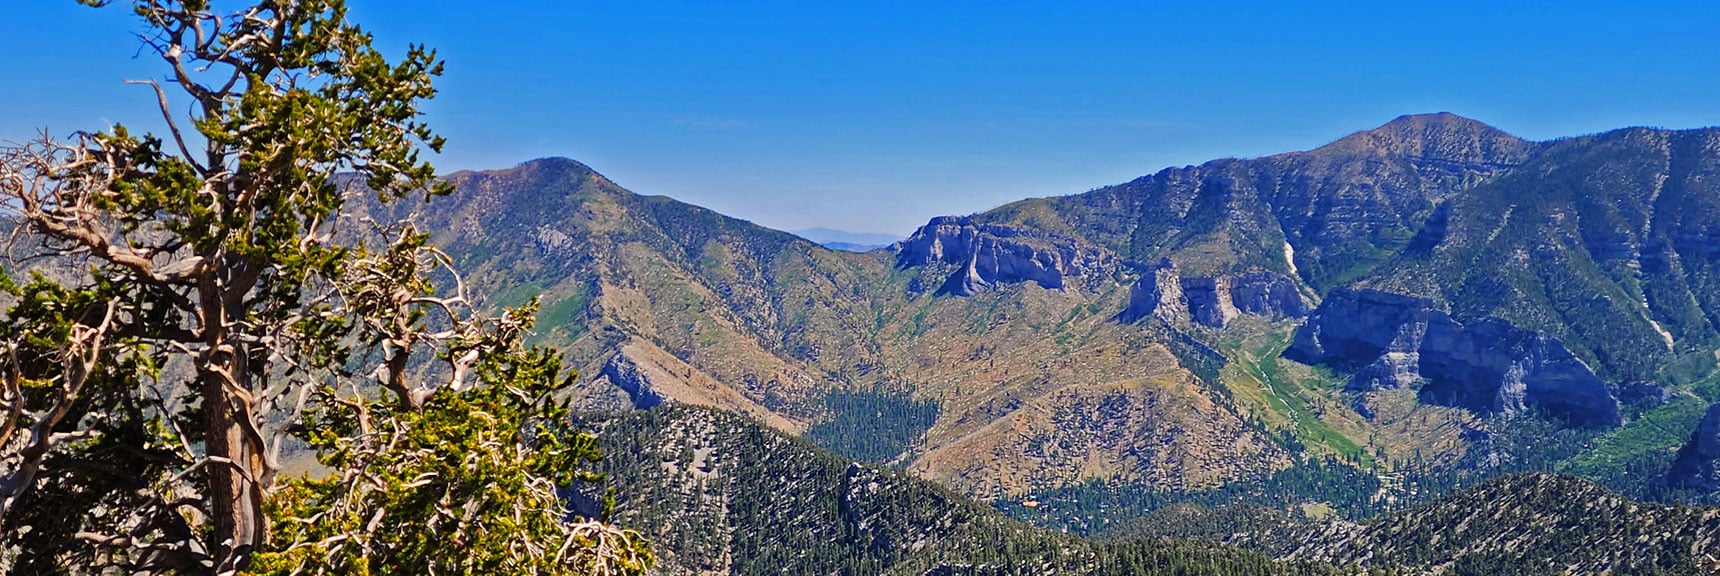 Harris Mt. / Griffith Peak Saddle & Western Ascent Ridge from North Loop Trail | Fletcher Canyon / Fletcher Peak / Cockscomb Ridge Circuit | Mt. Charleston Wilderness | Spring Mountains, Nevada